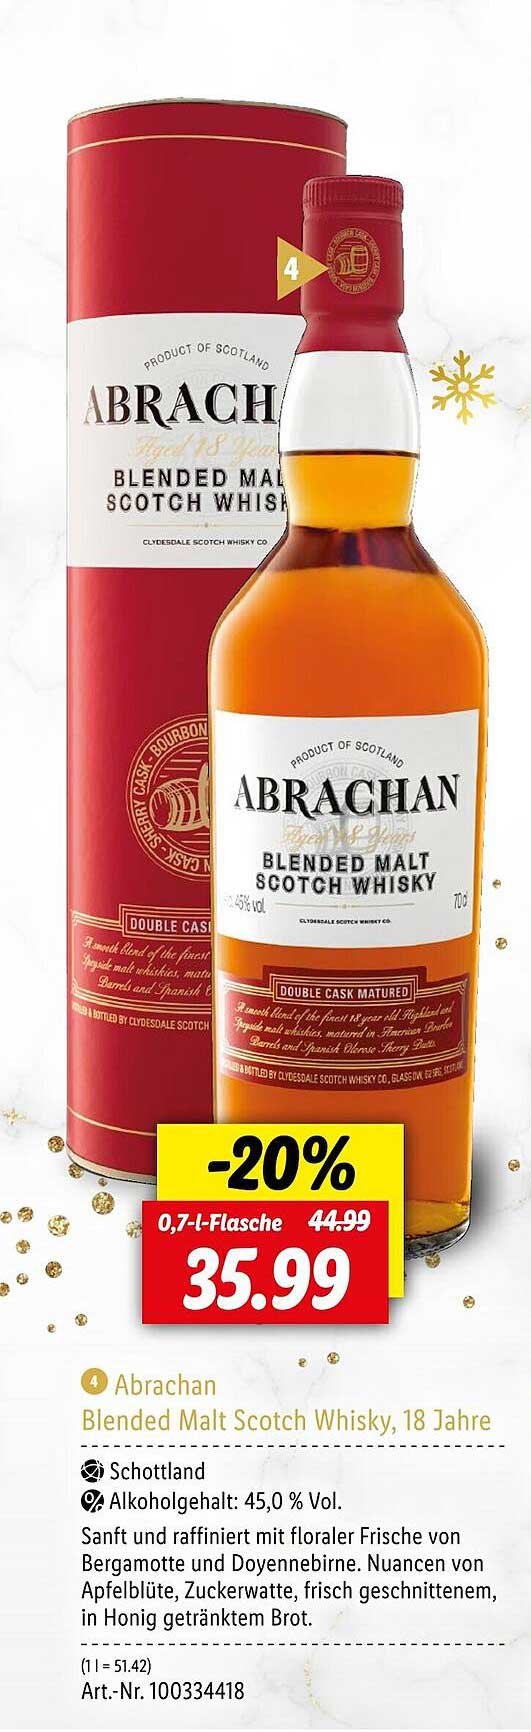 Abrachan Blended Malt Scotch Whisky, 18 Jahre Angebot bei Lidl